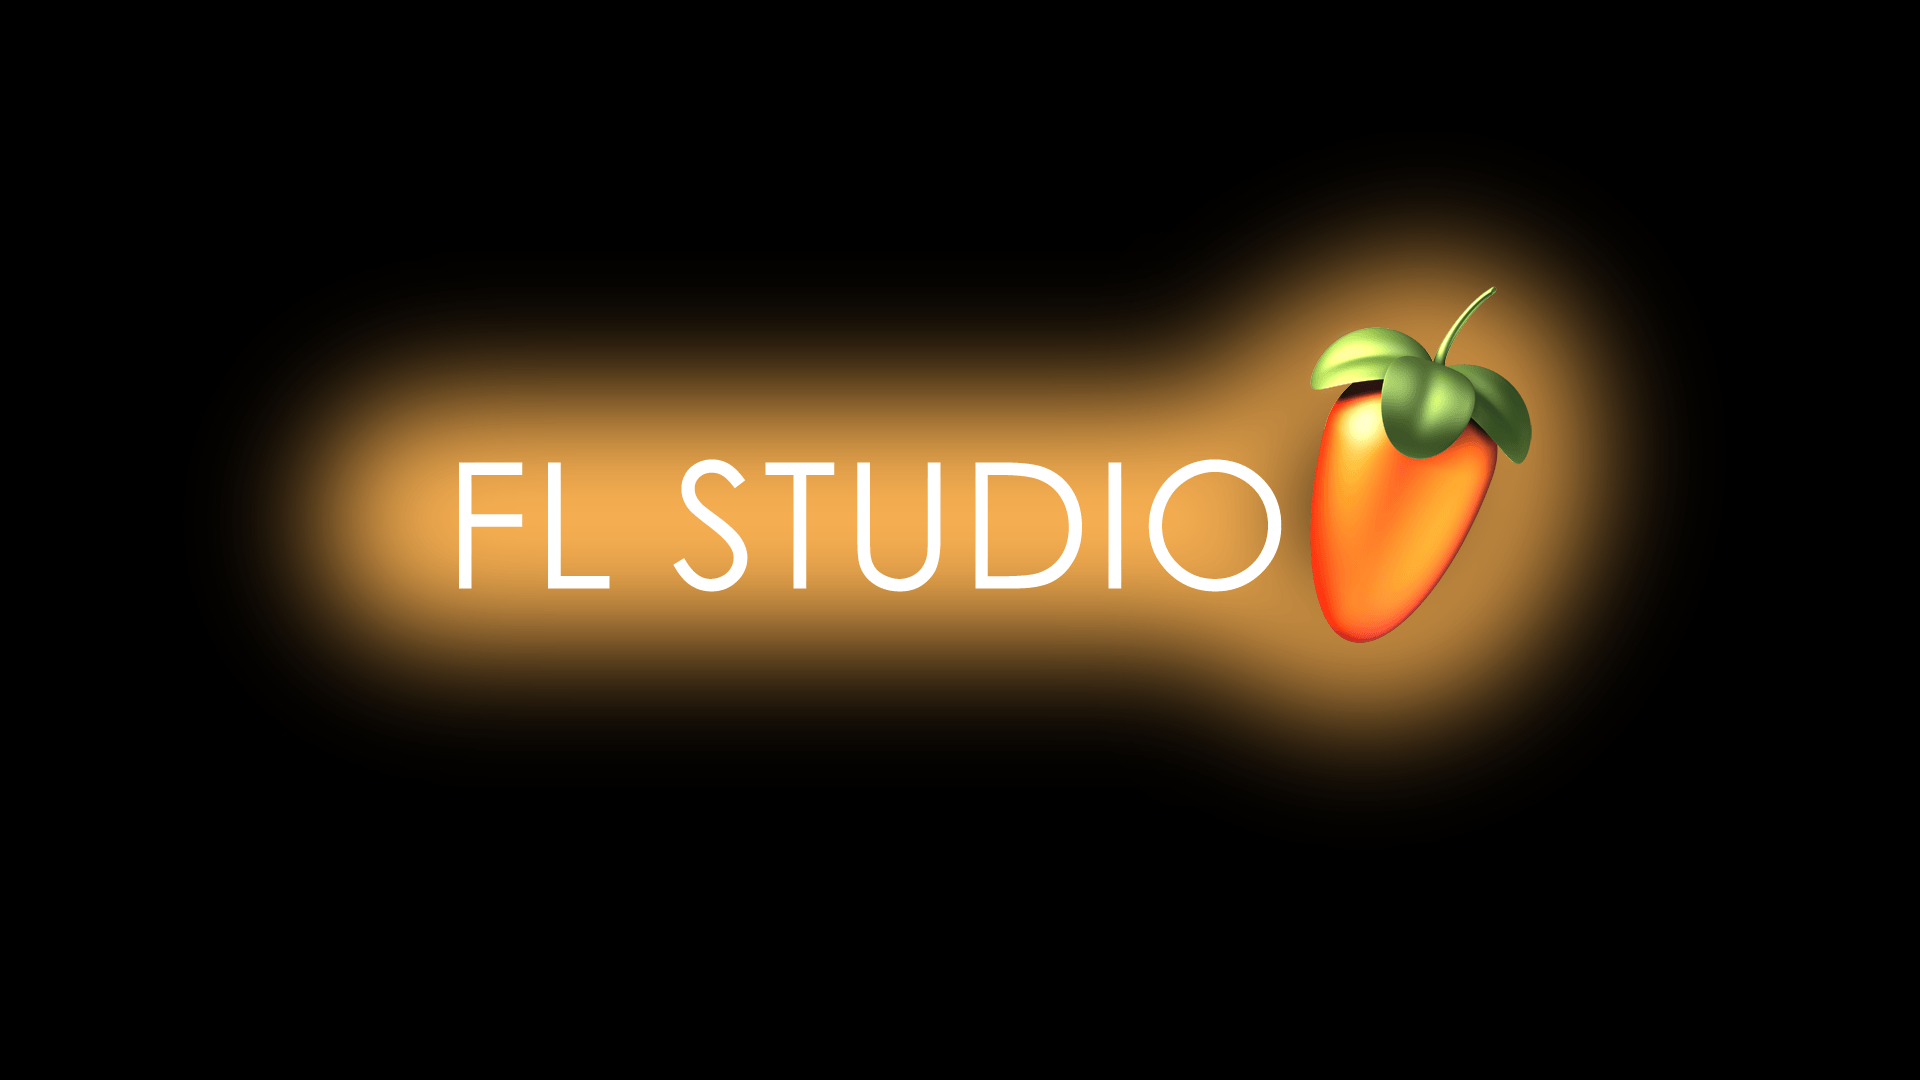 Fl Studio Wallpaper Free Fl Studio Background